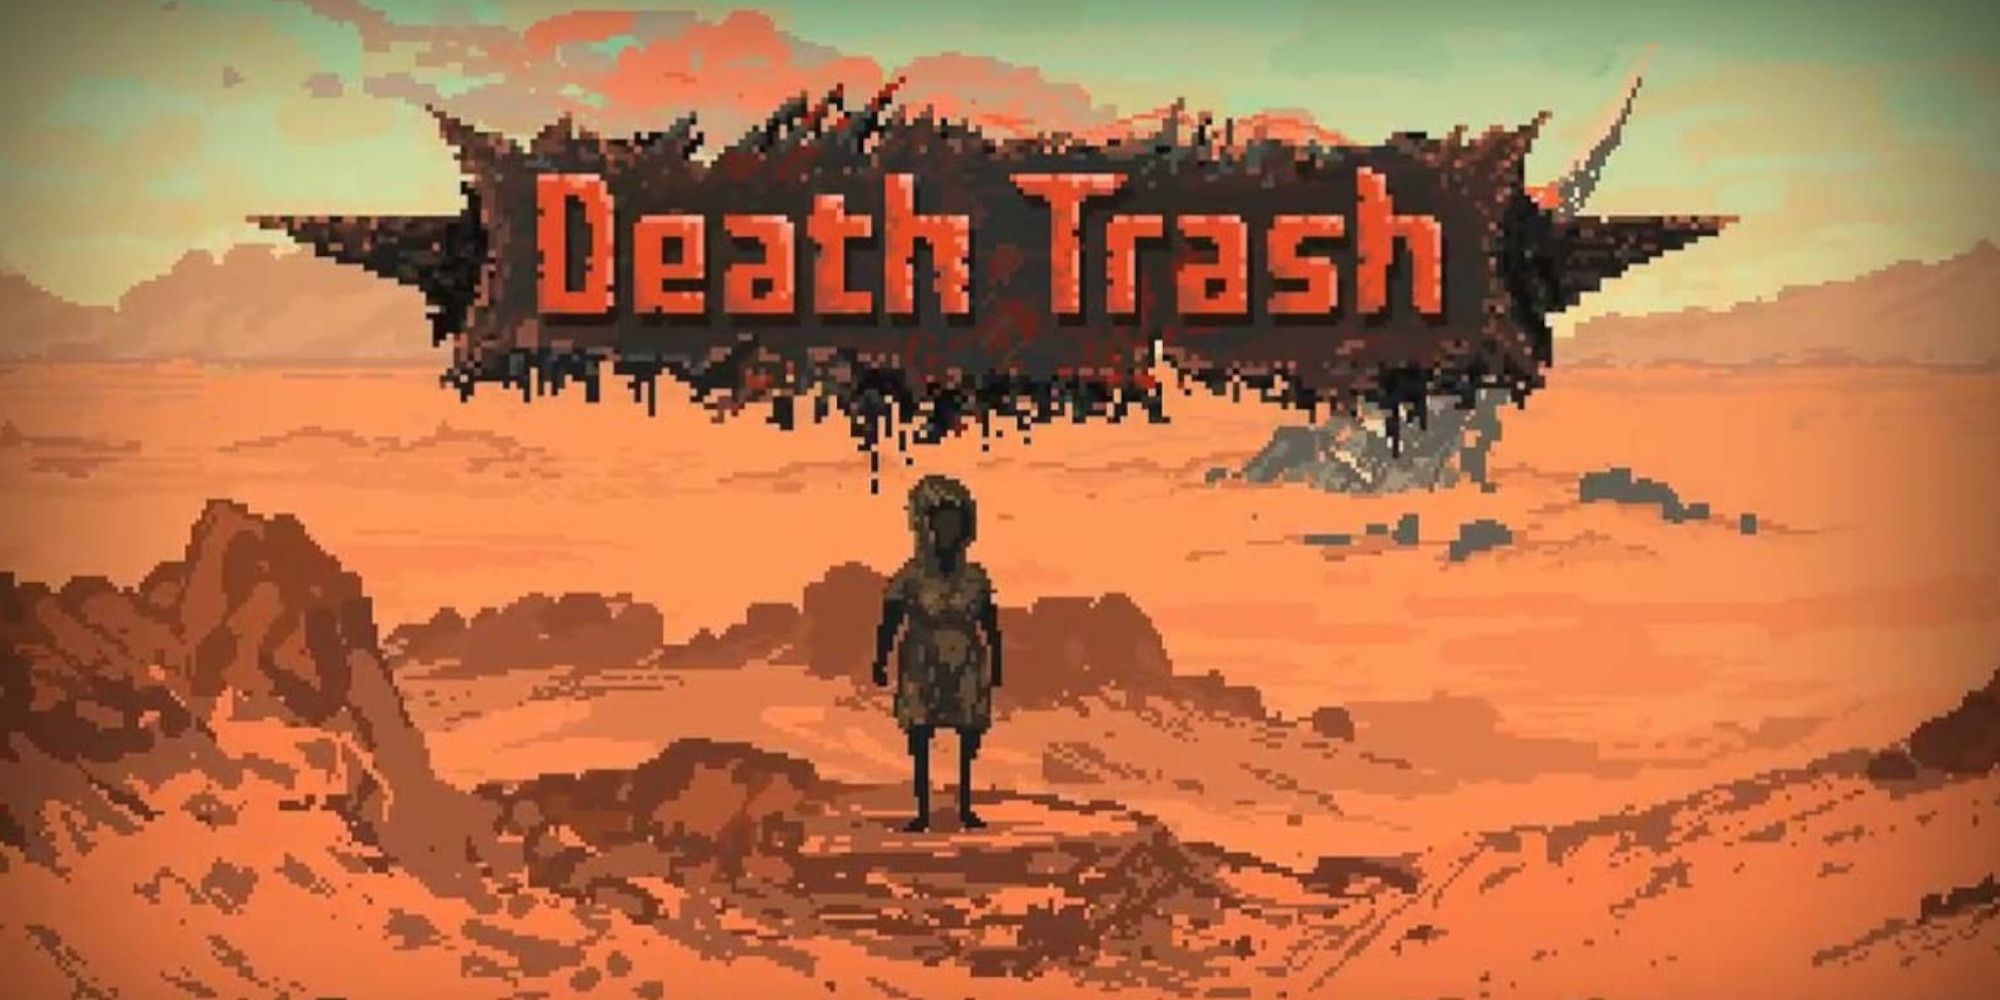 death trash download free